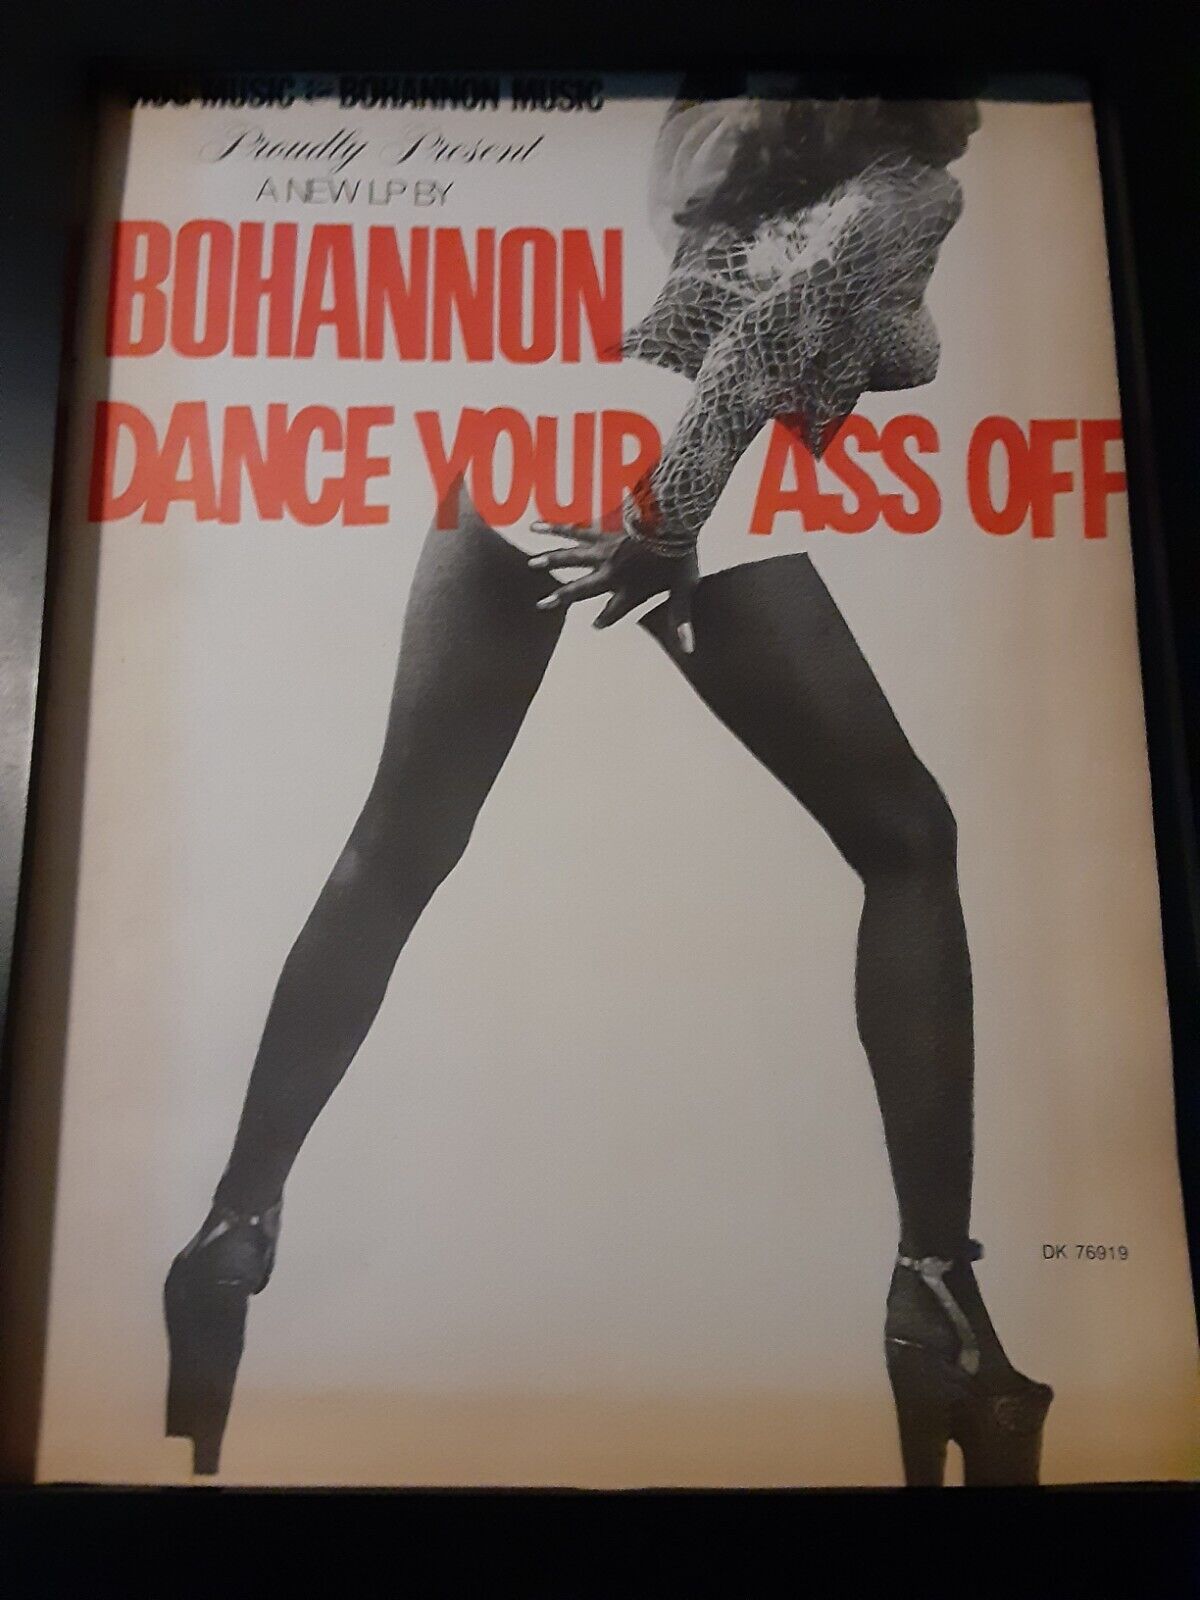 Bohannon Dance Your Ass Off Rare Original Promo Poster Ad Framed!